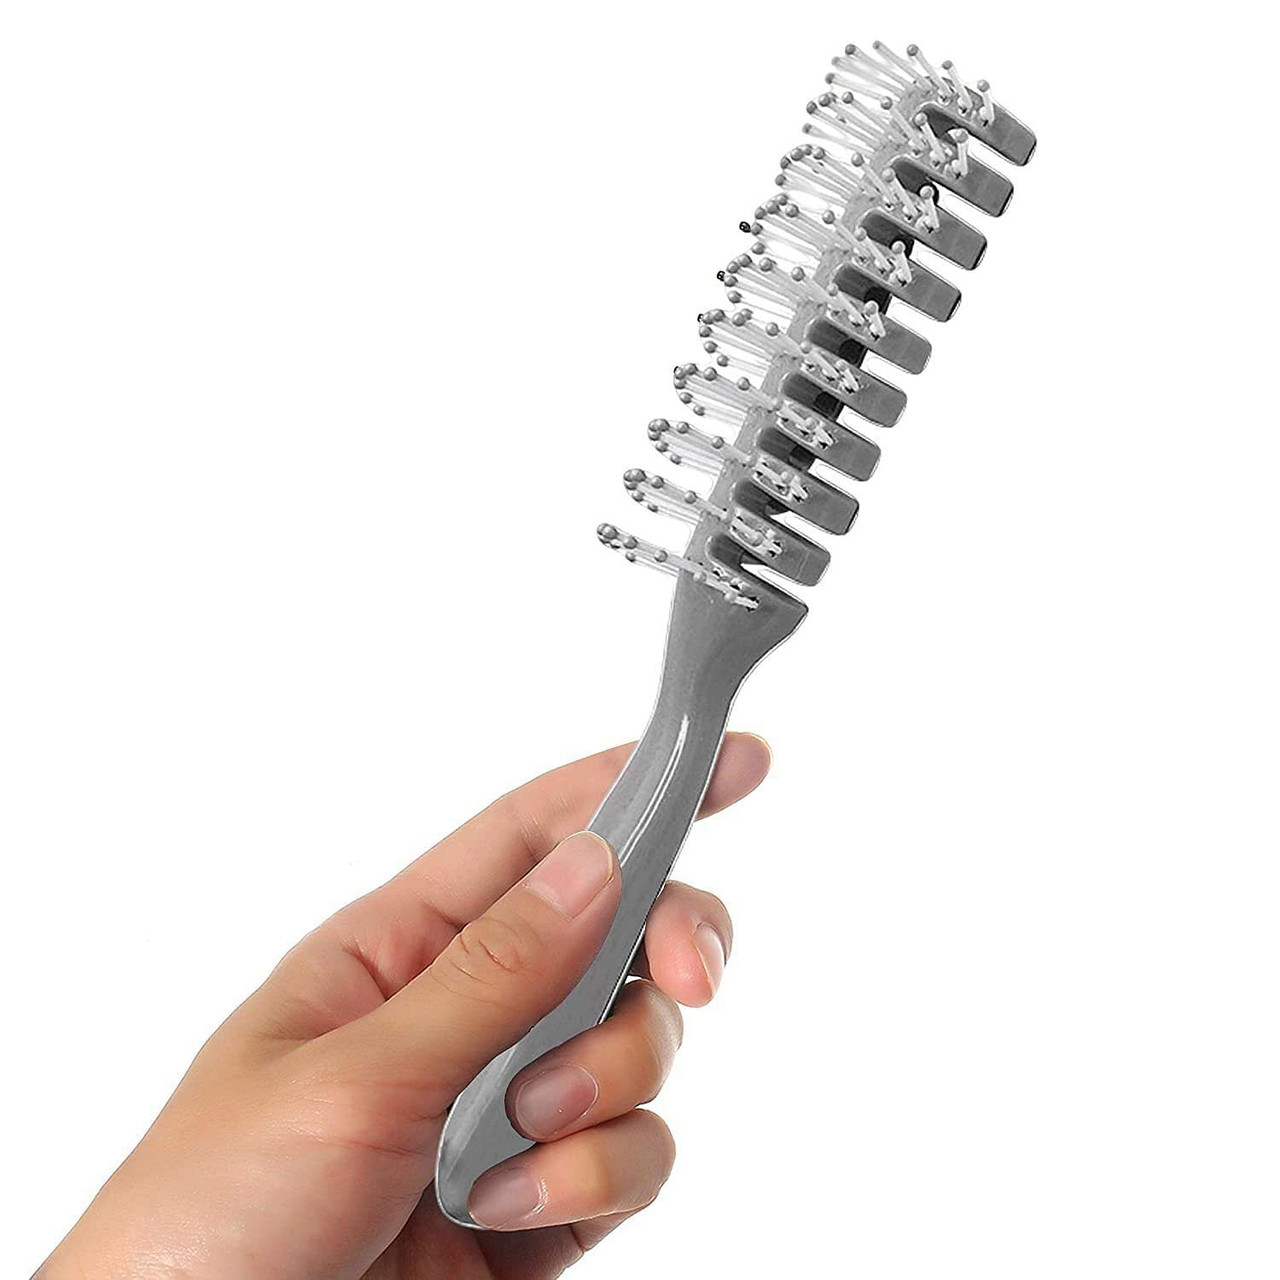 Gray Hair Brush for Men and Women 8 Inch. Pack of 12 Plastic Vented Hair Brushes for All Hair Types